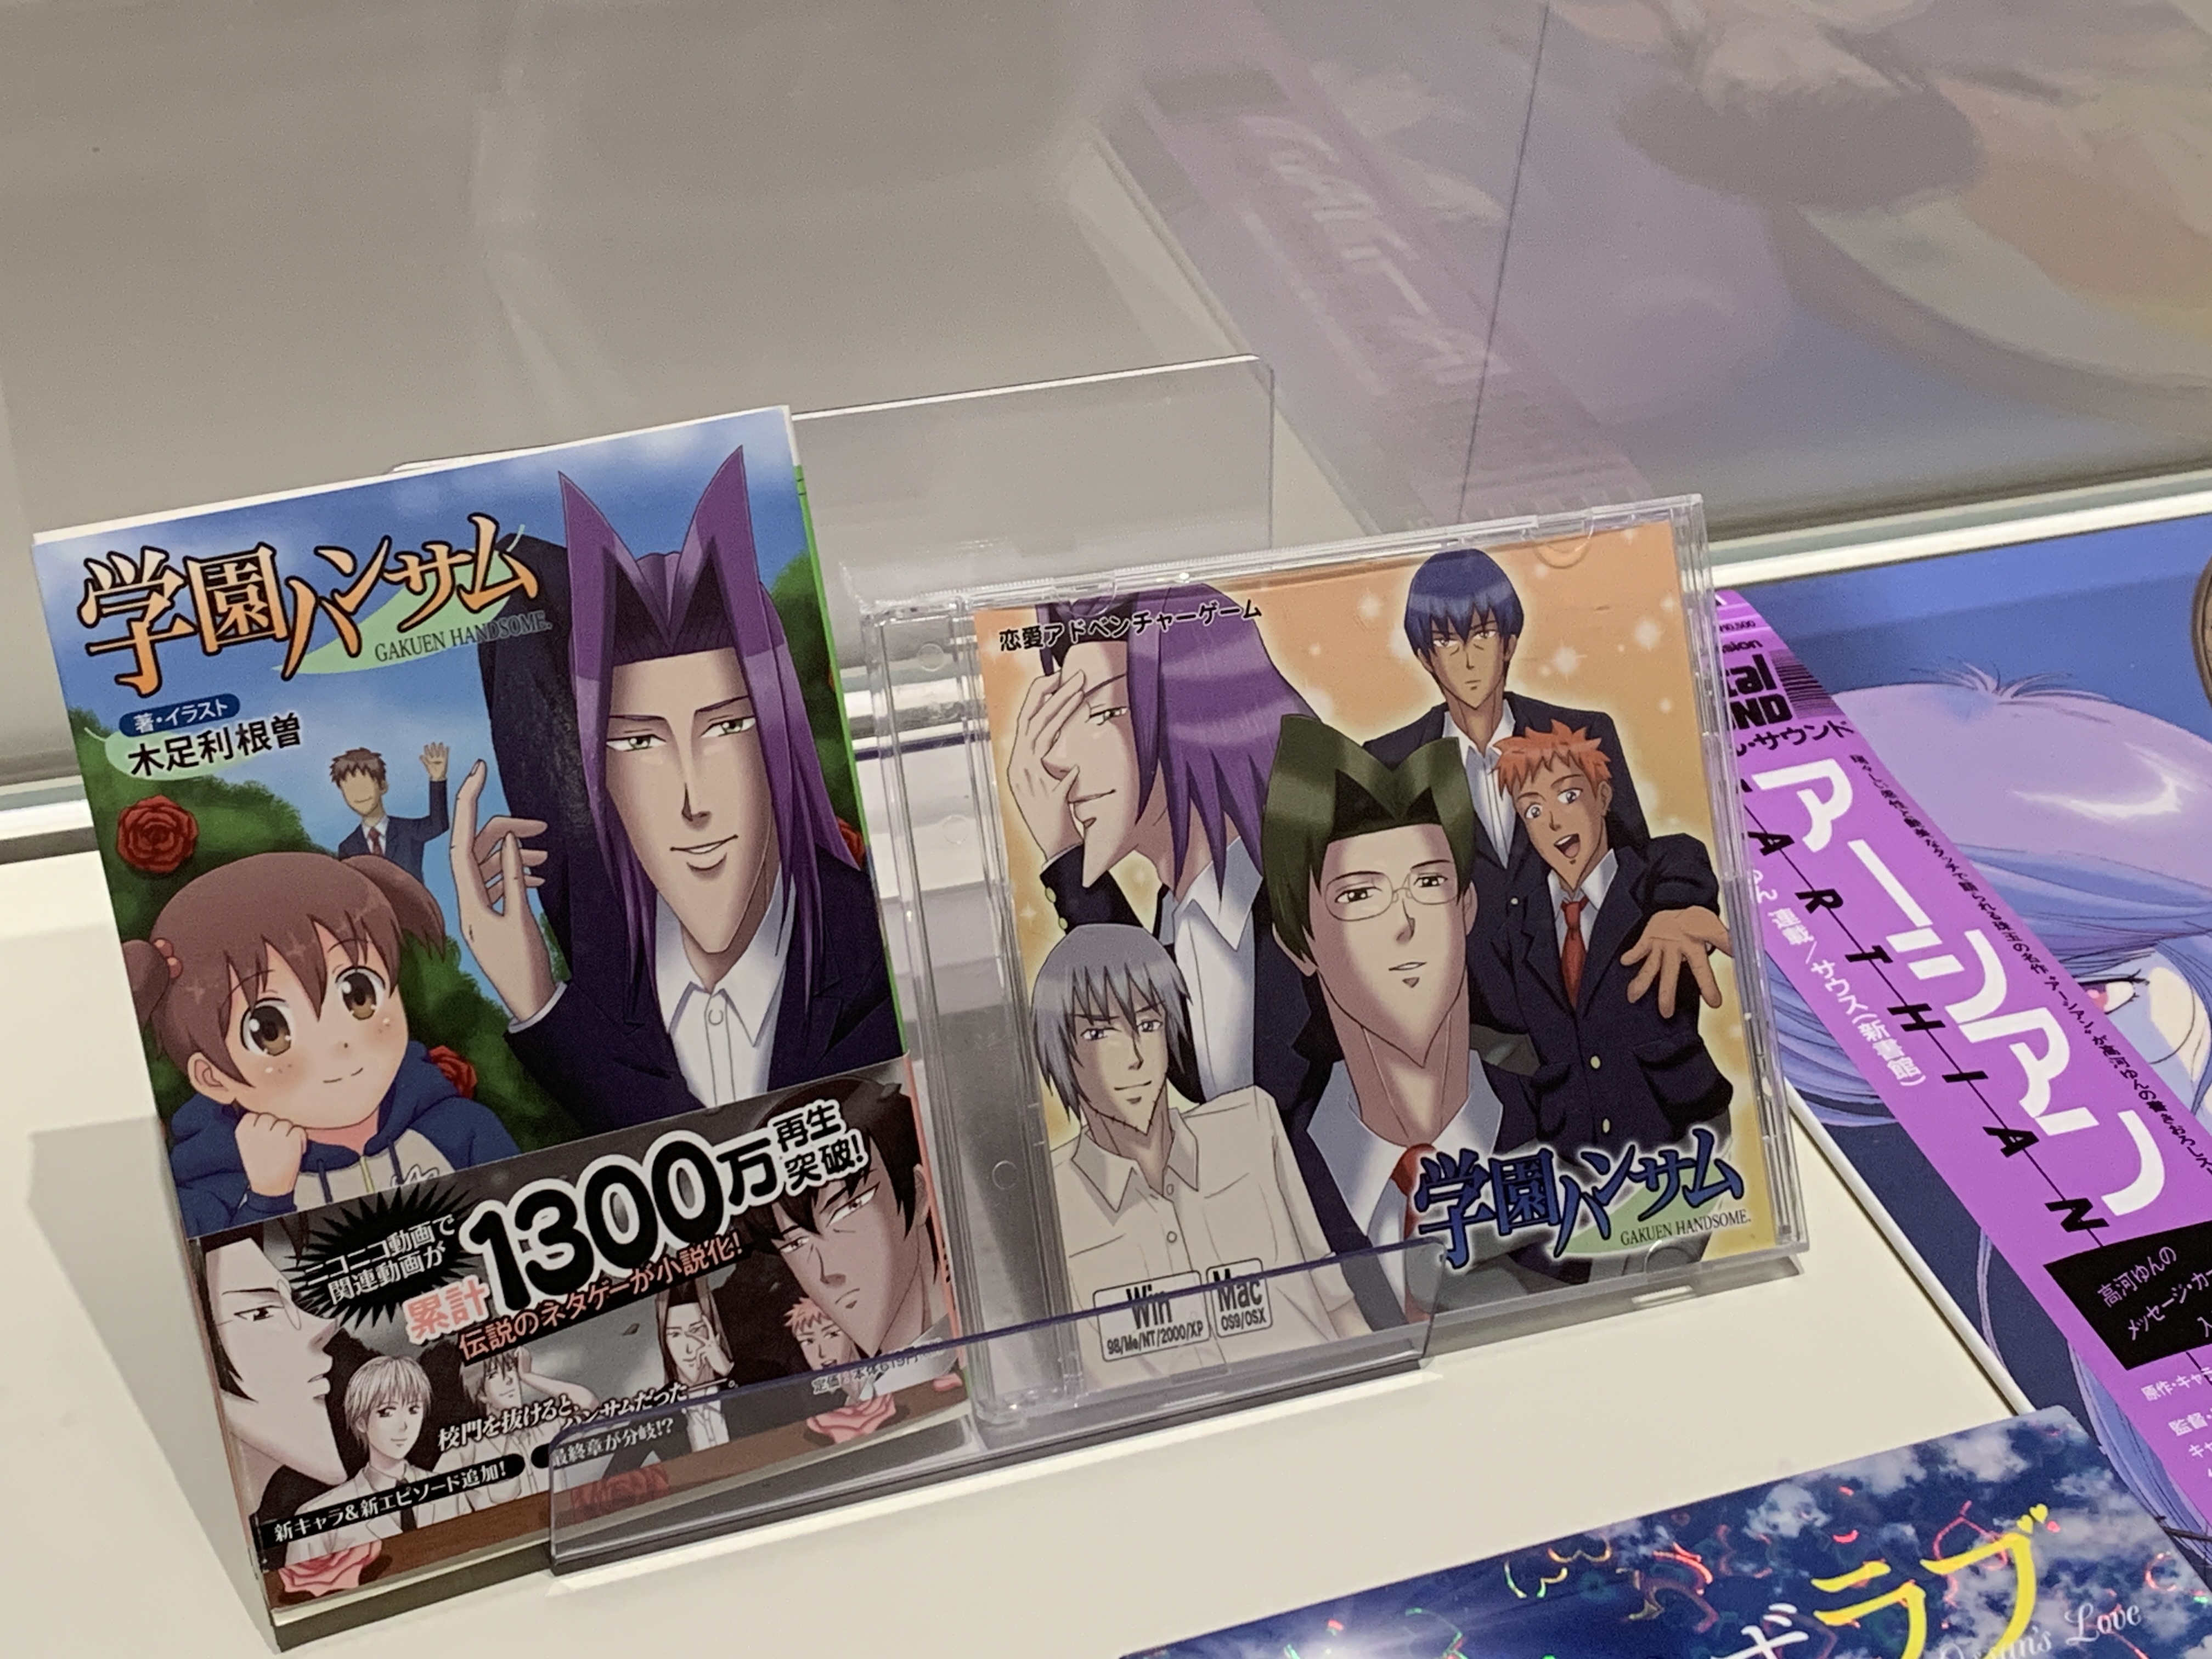 Gakuen Handsome, a parody of Gakuen Heaven, had its own manga and game.